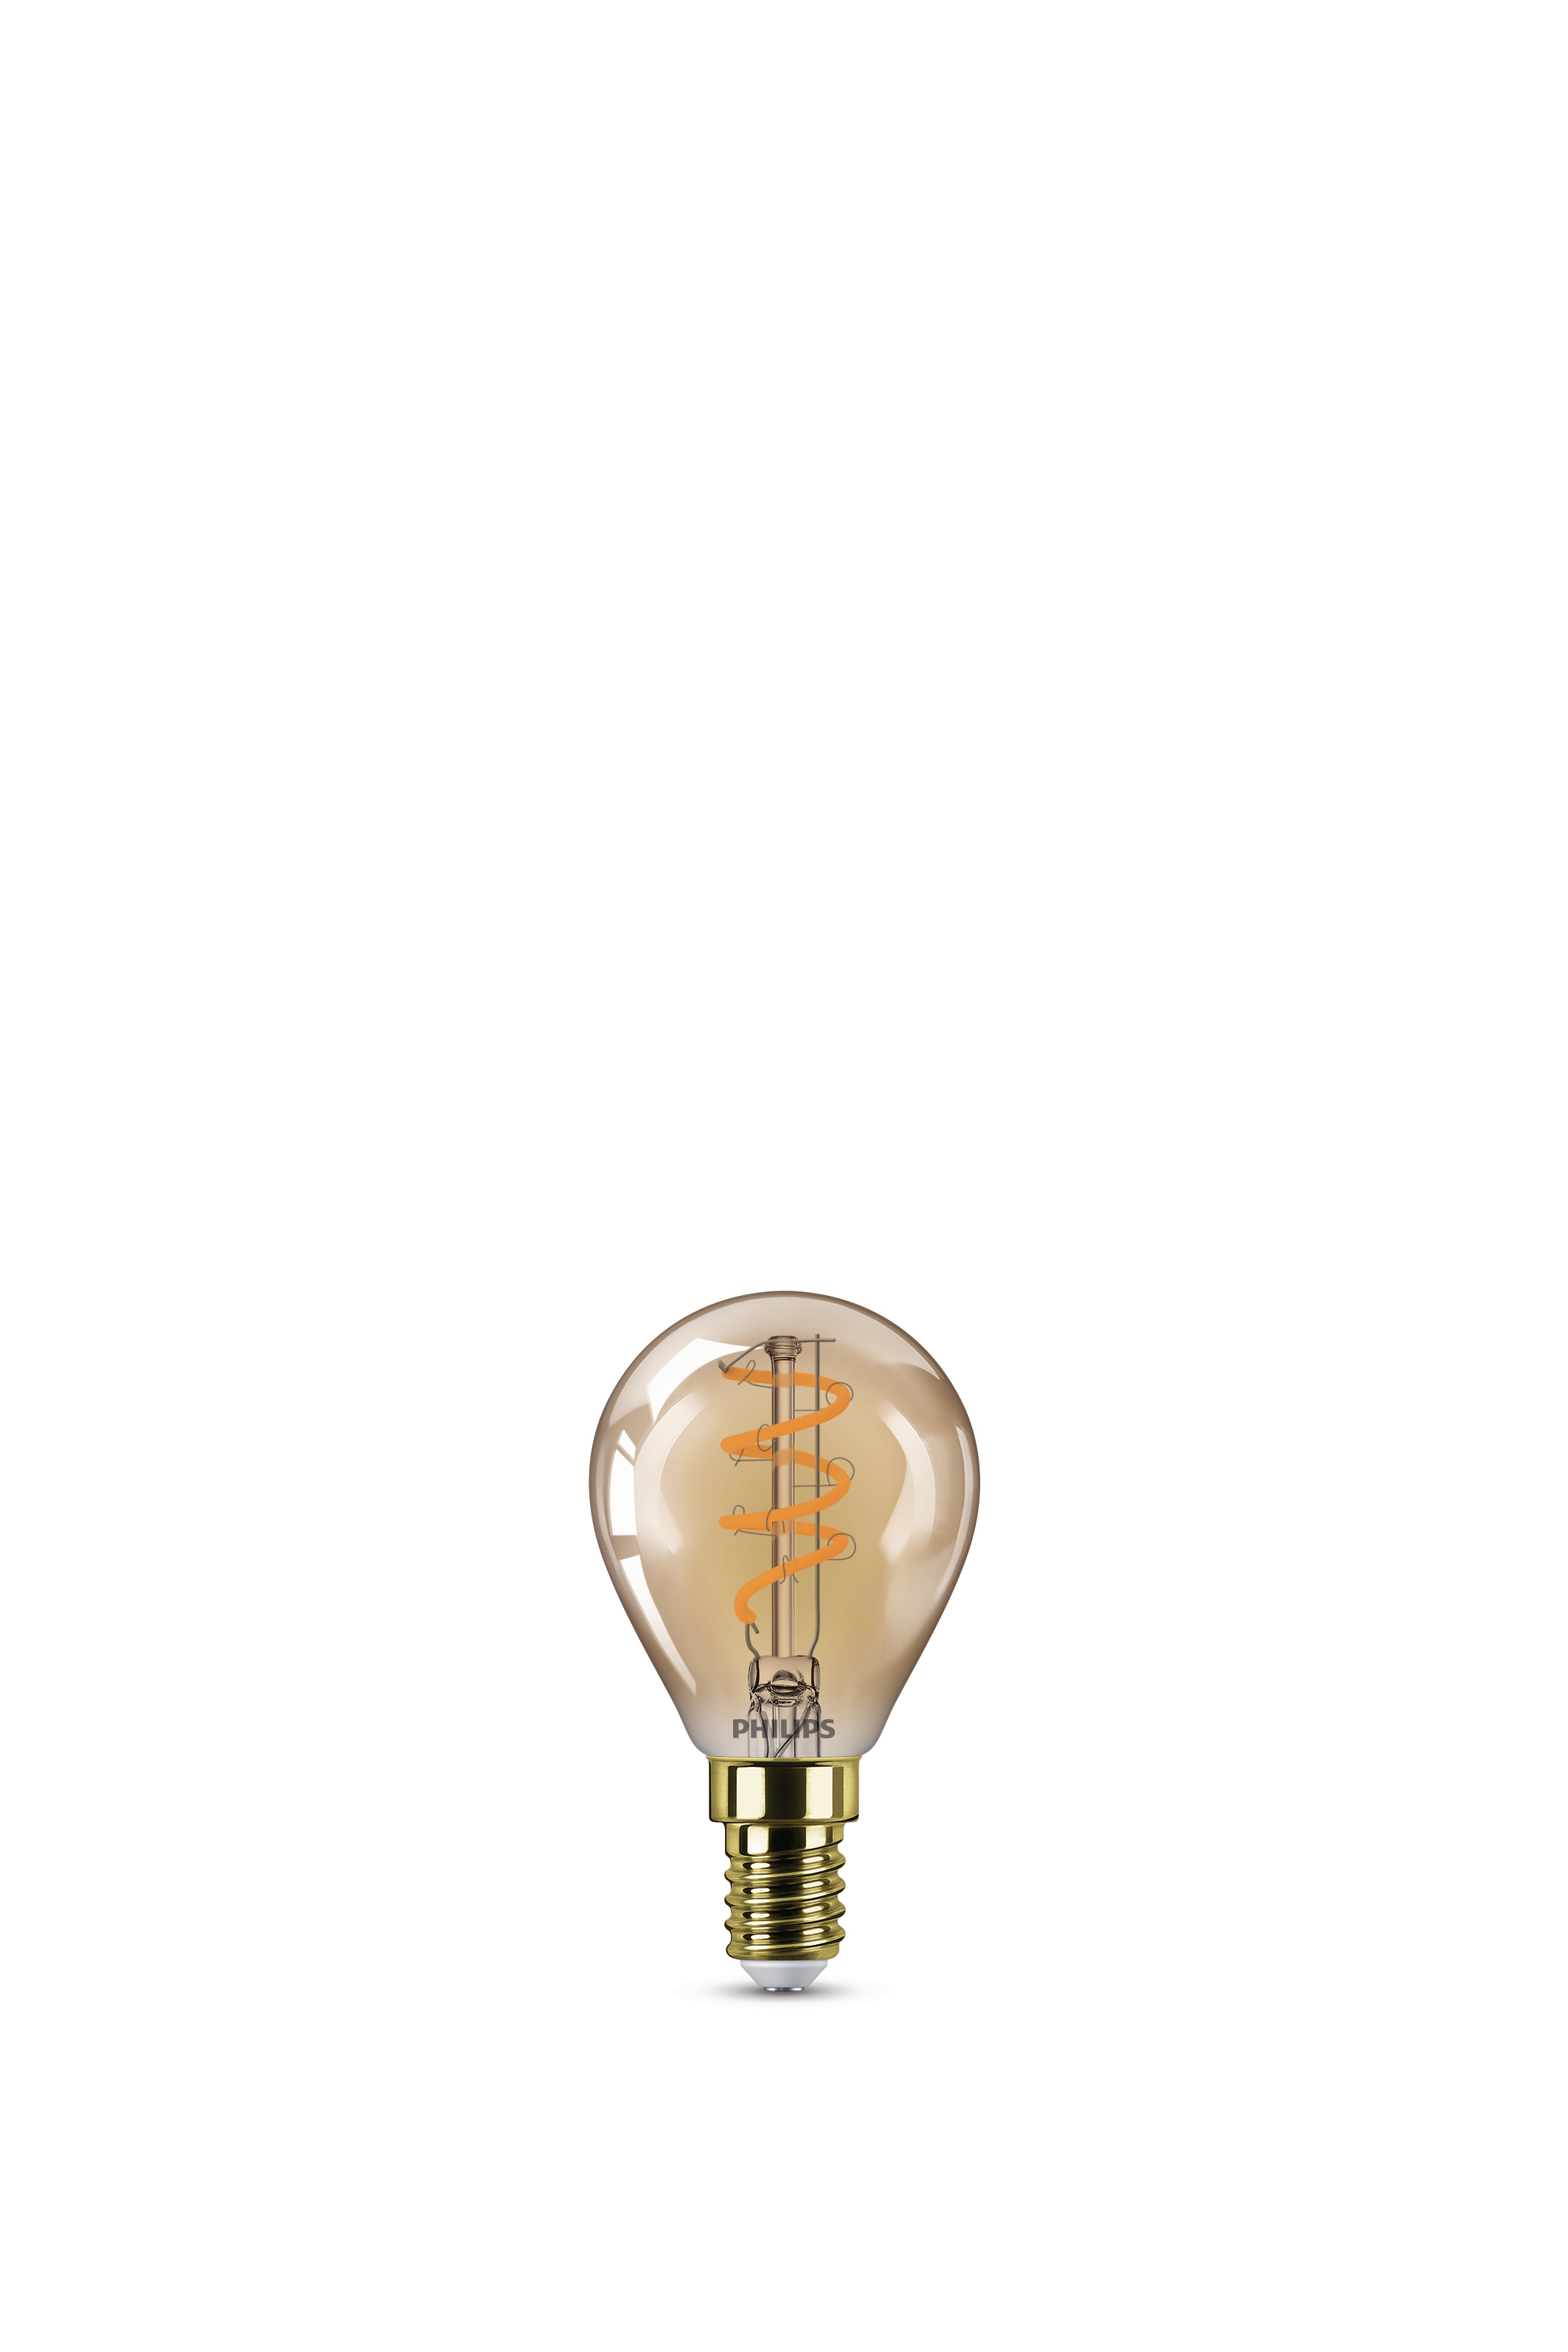 Vintage 15W, Sockel, dimmbar mit Lampe classic Warmweiß LED E14 Tropfenlampe PHILIPS